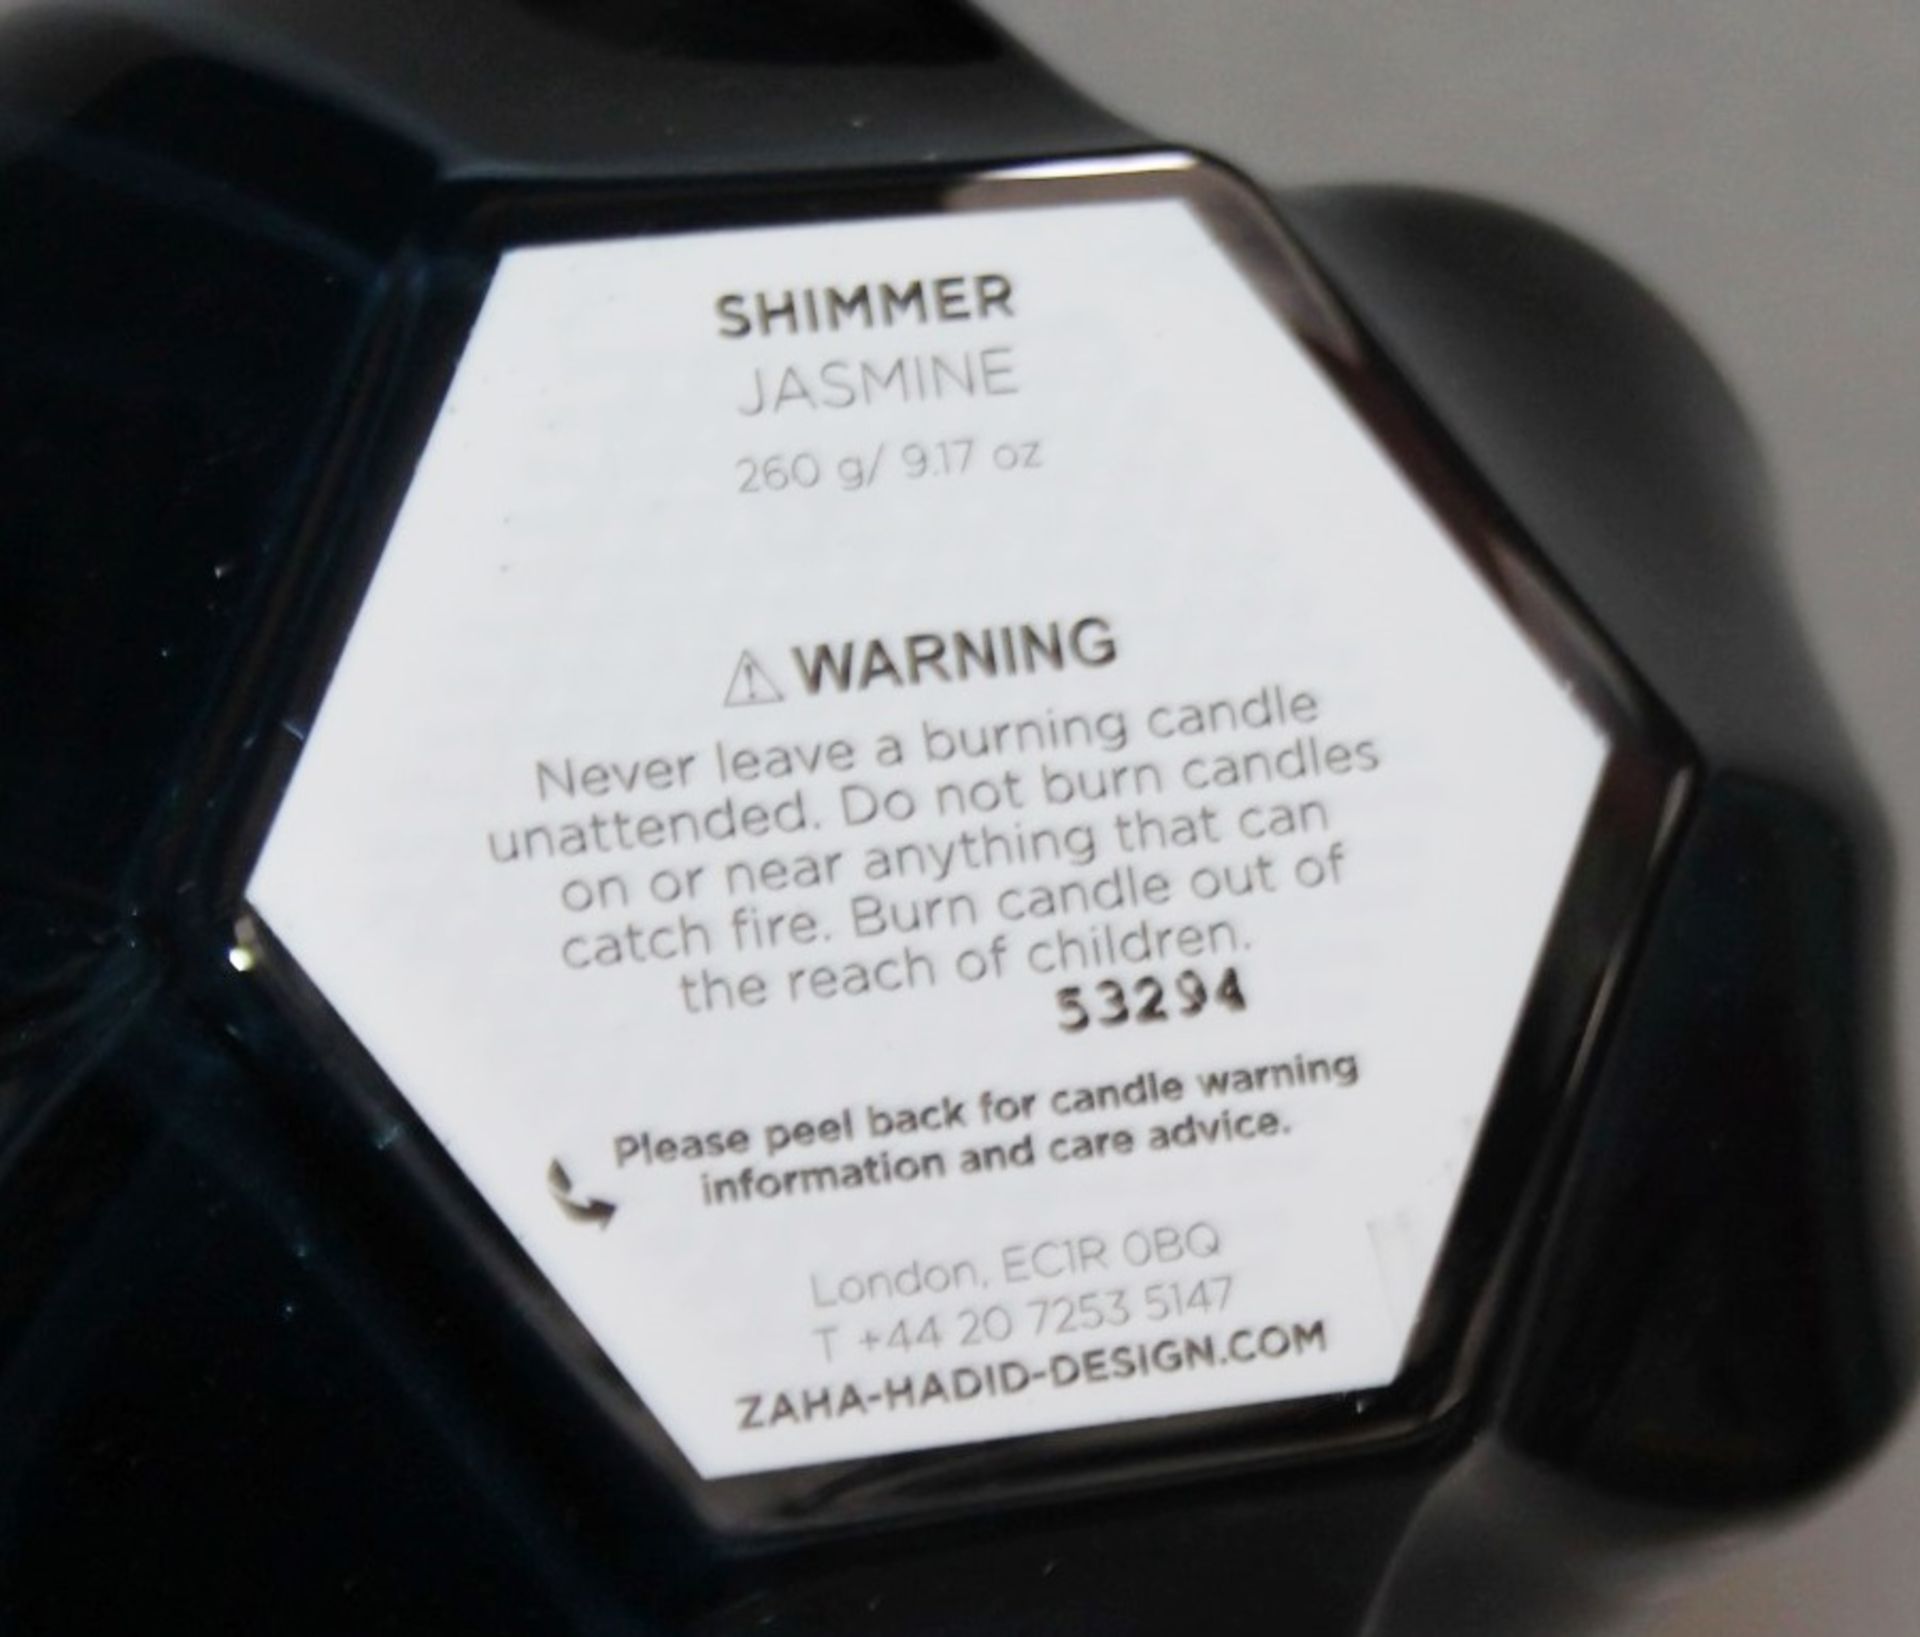 1 x ZAHA HADID DESIGN Shimmer Jasmine Scented Candle (260g) - Original Price £155.00 - Image 6 of 8